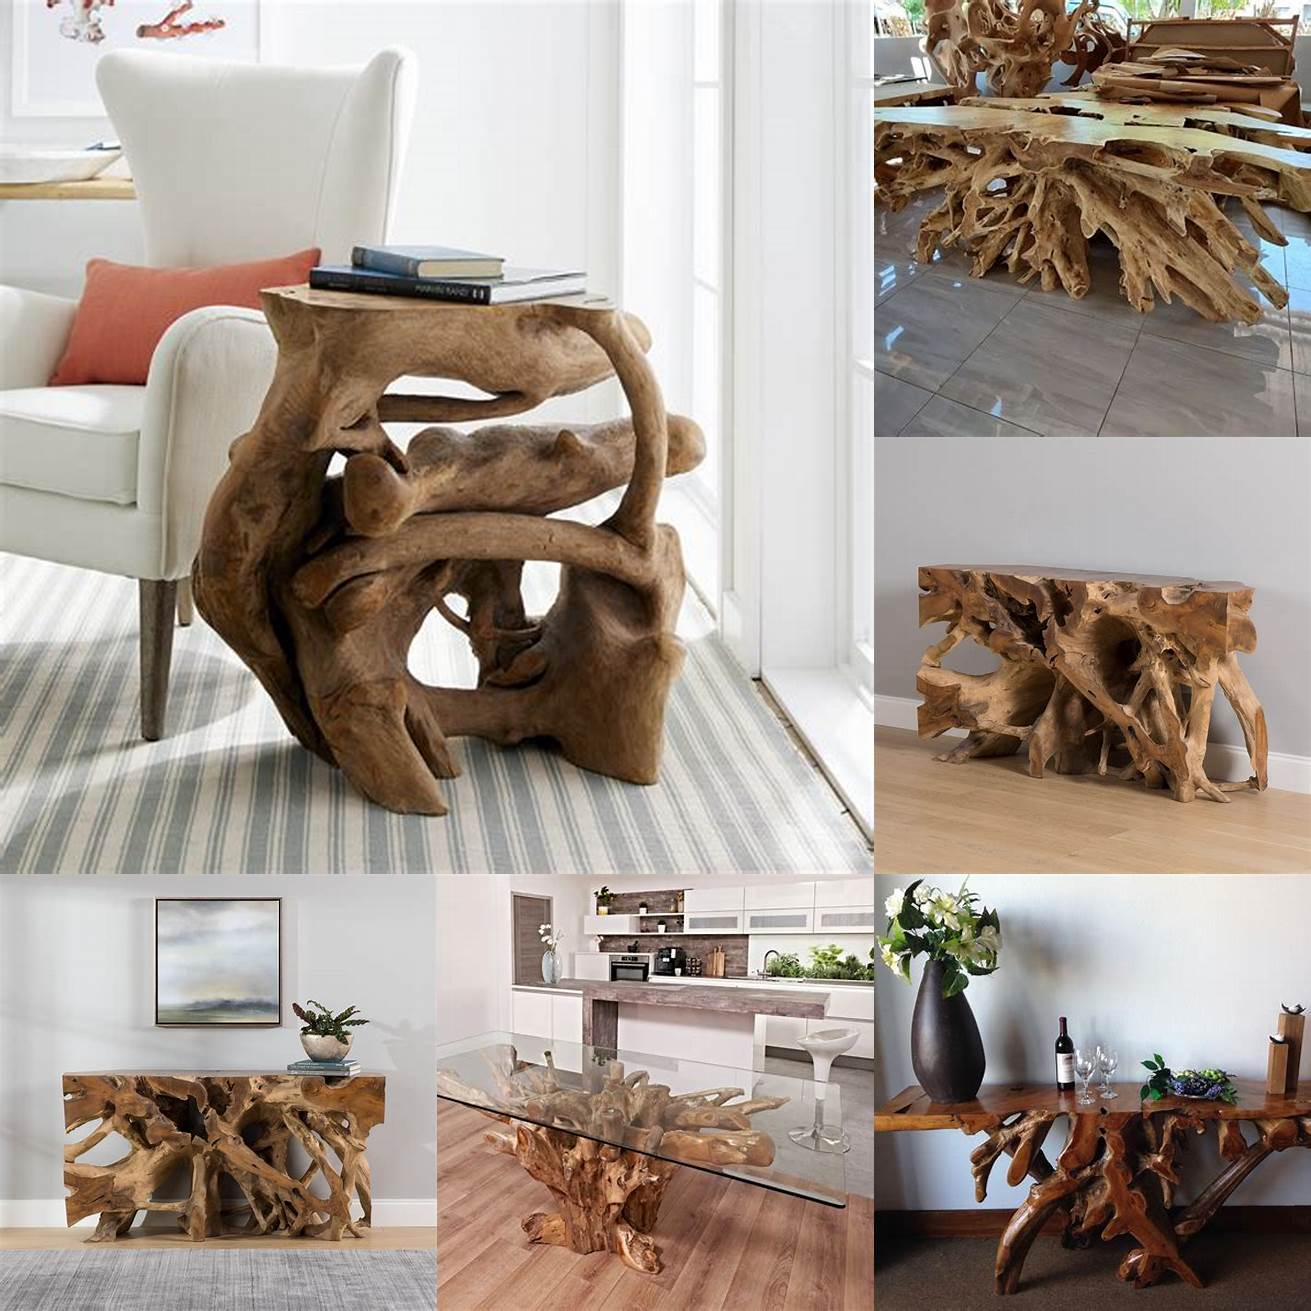 Teak root furniture in a living room setting